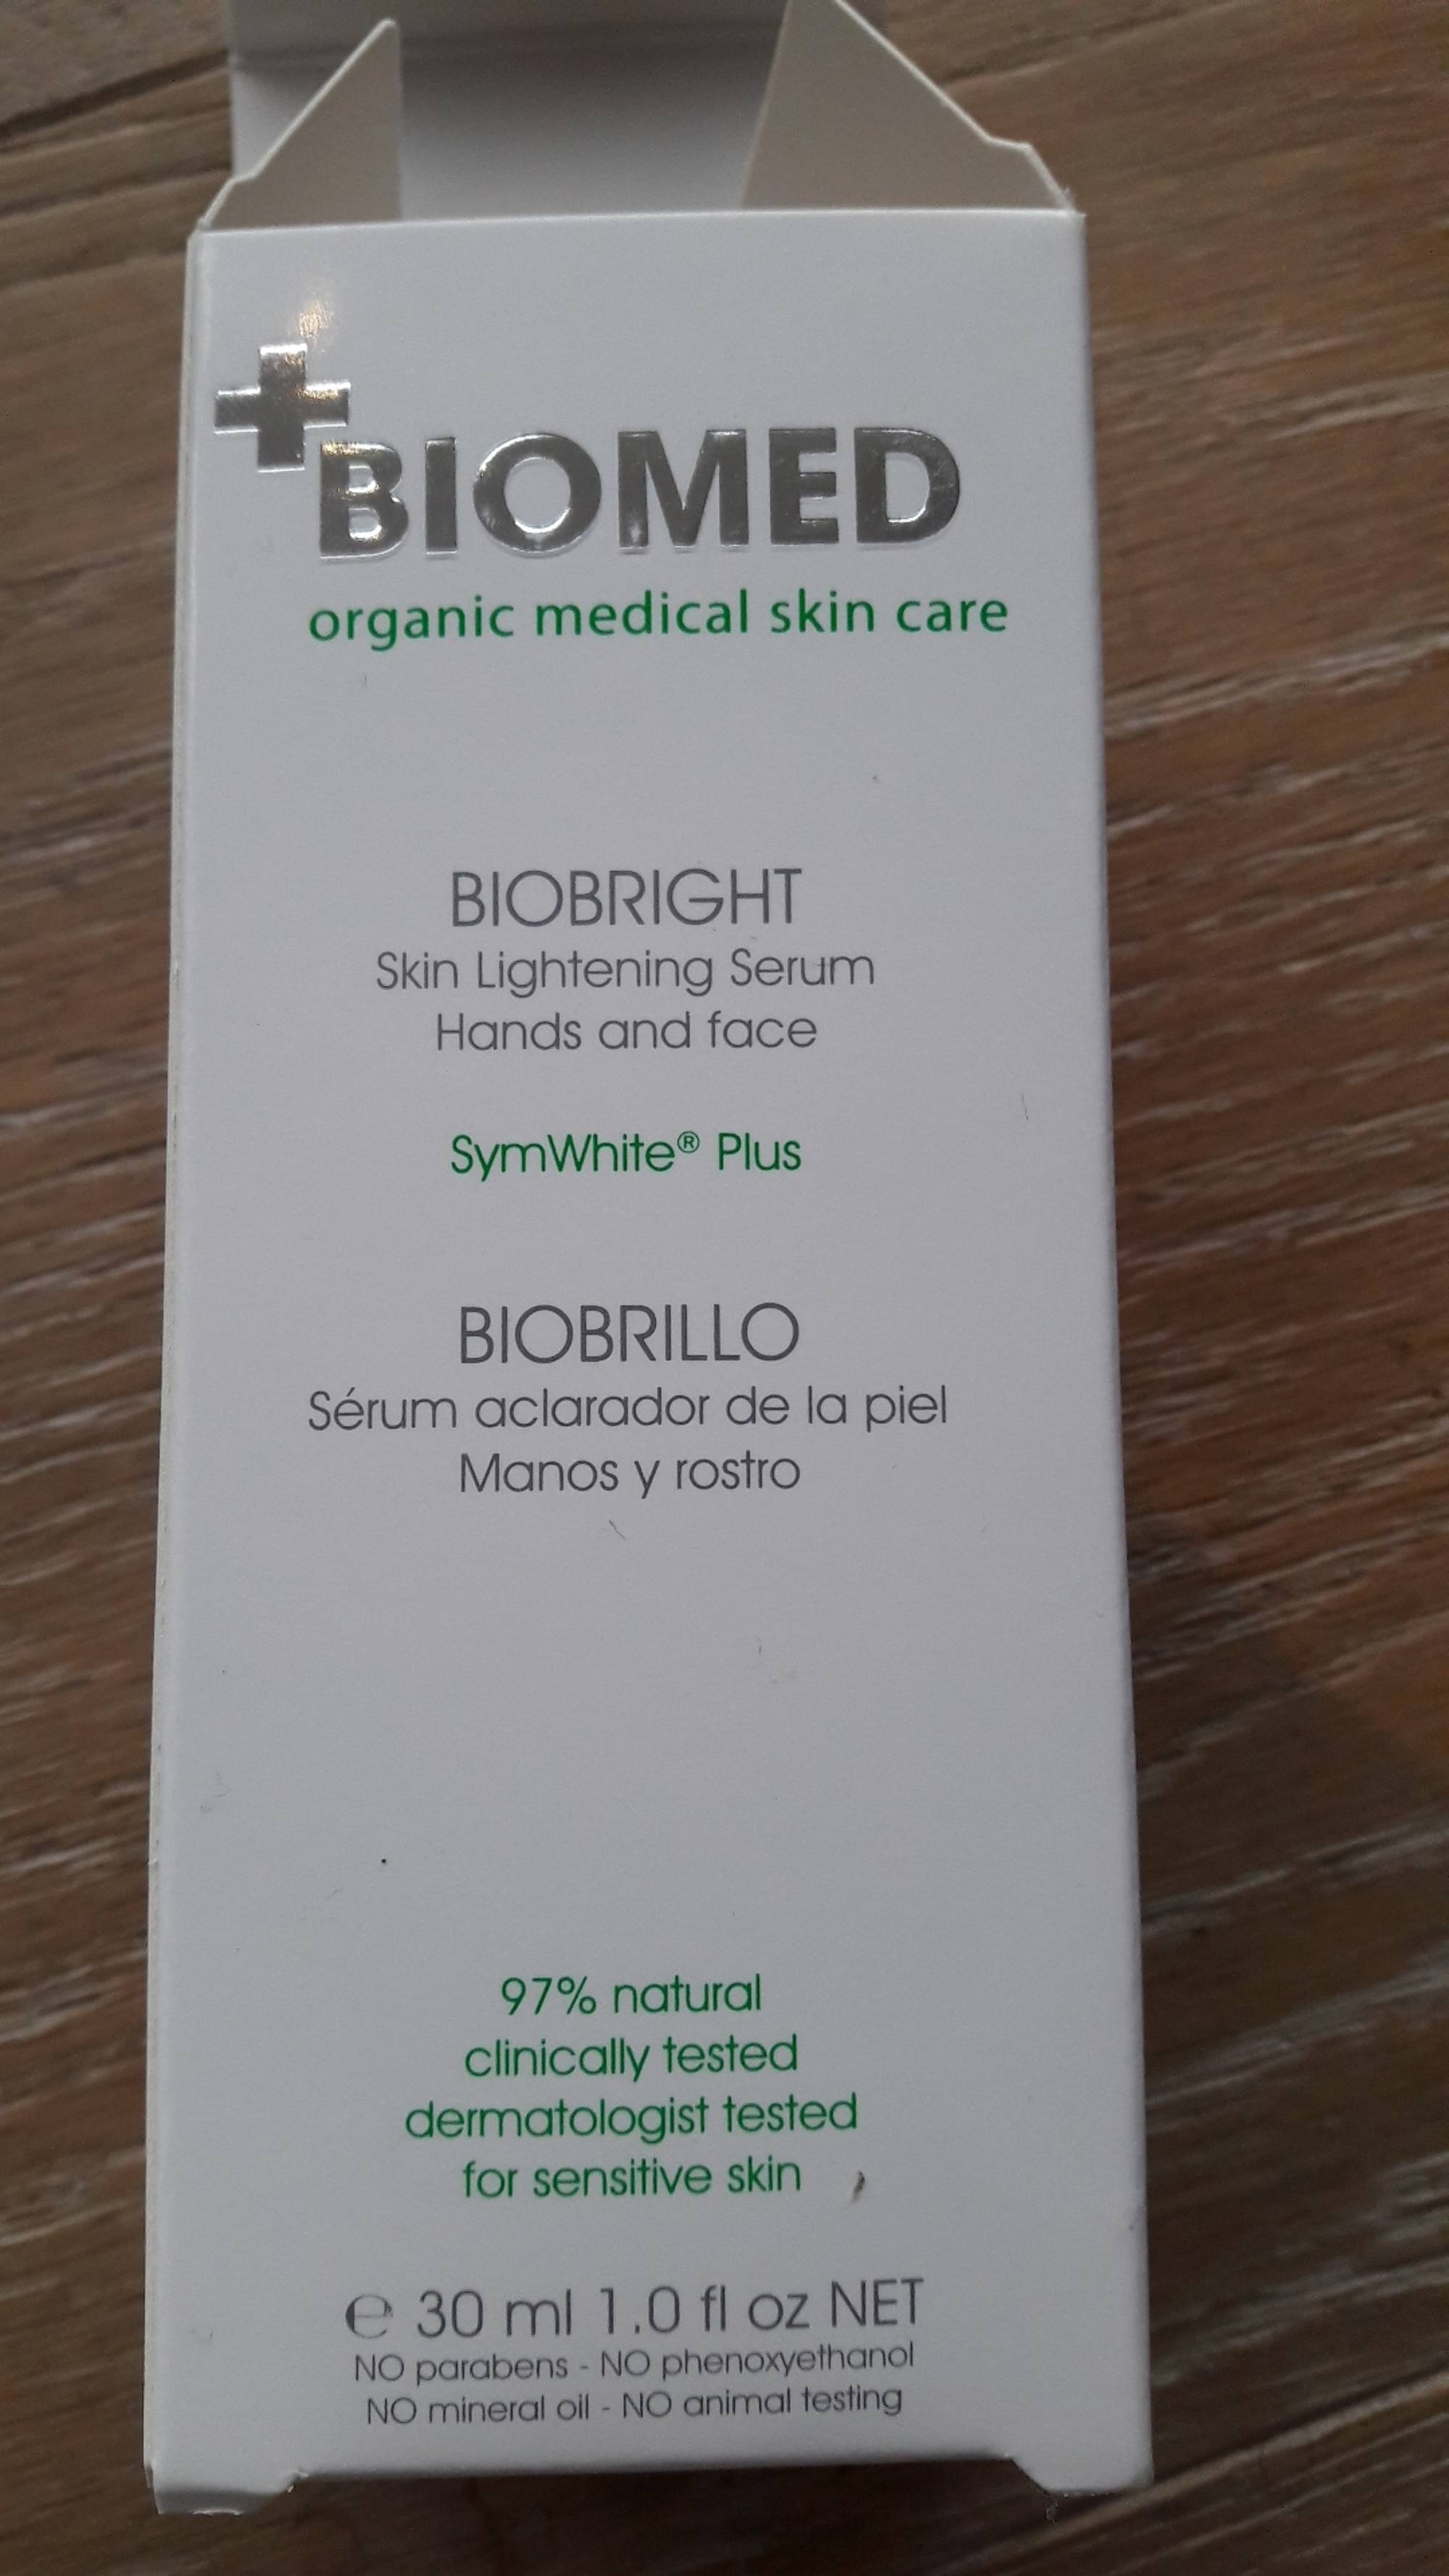 BIOMED - Biobright - Skin lightening serum hands and face